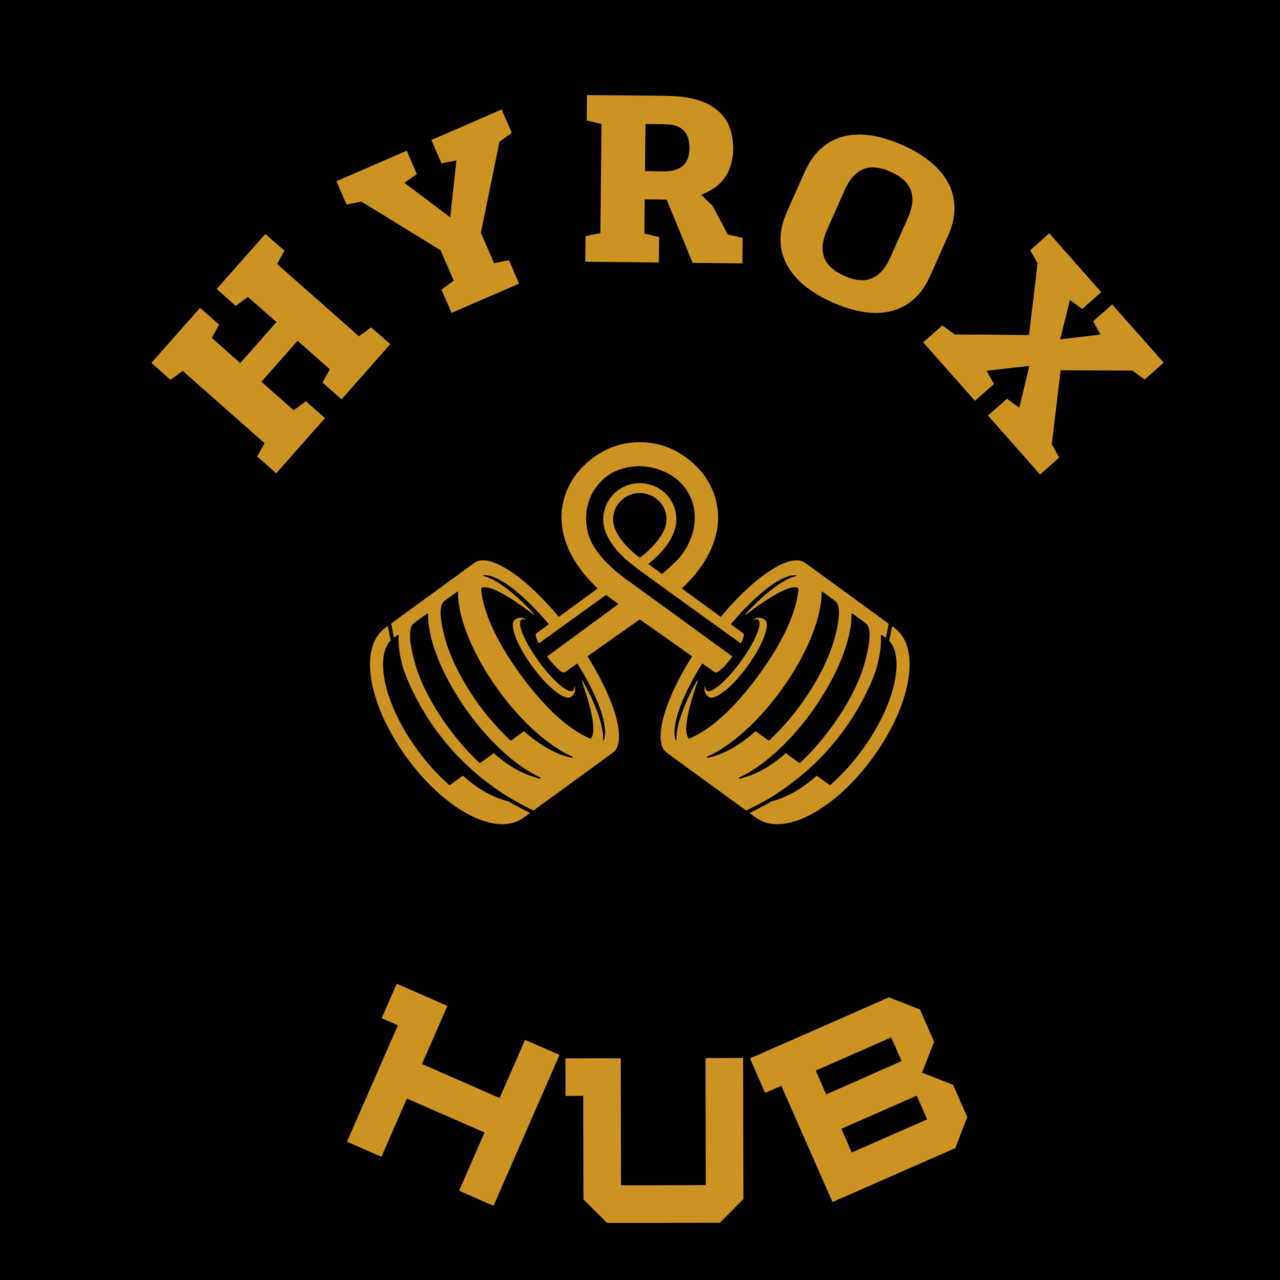 Artwork for HYROX HUB